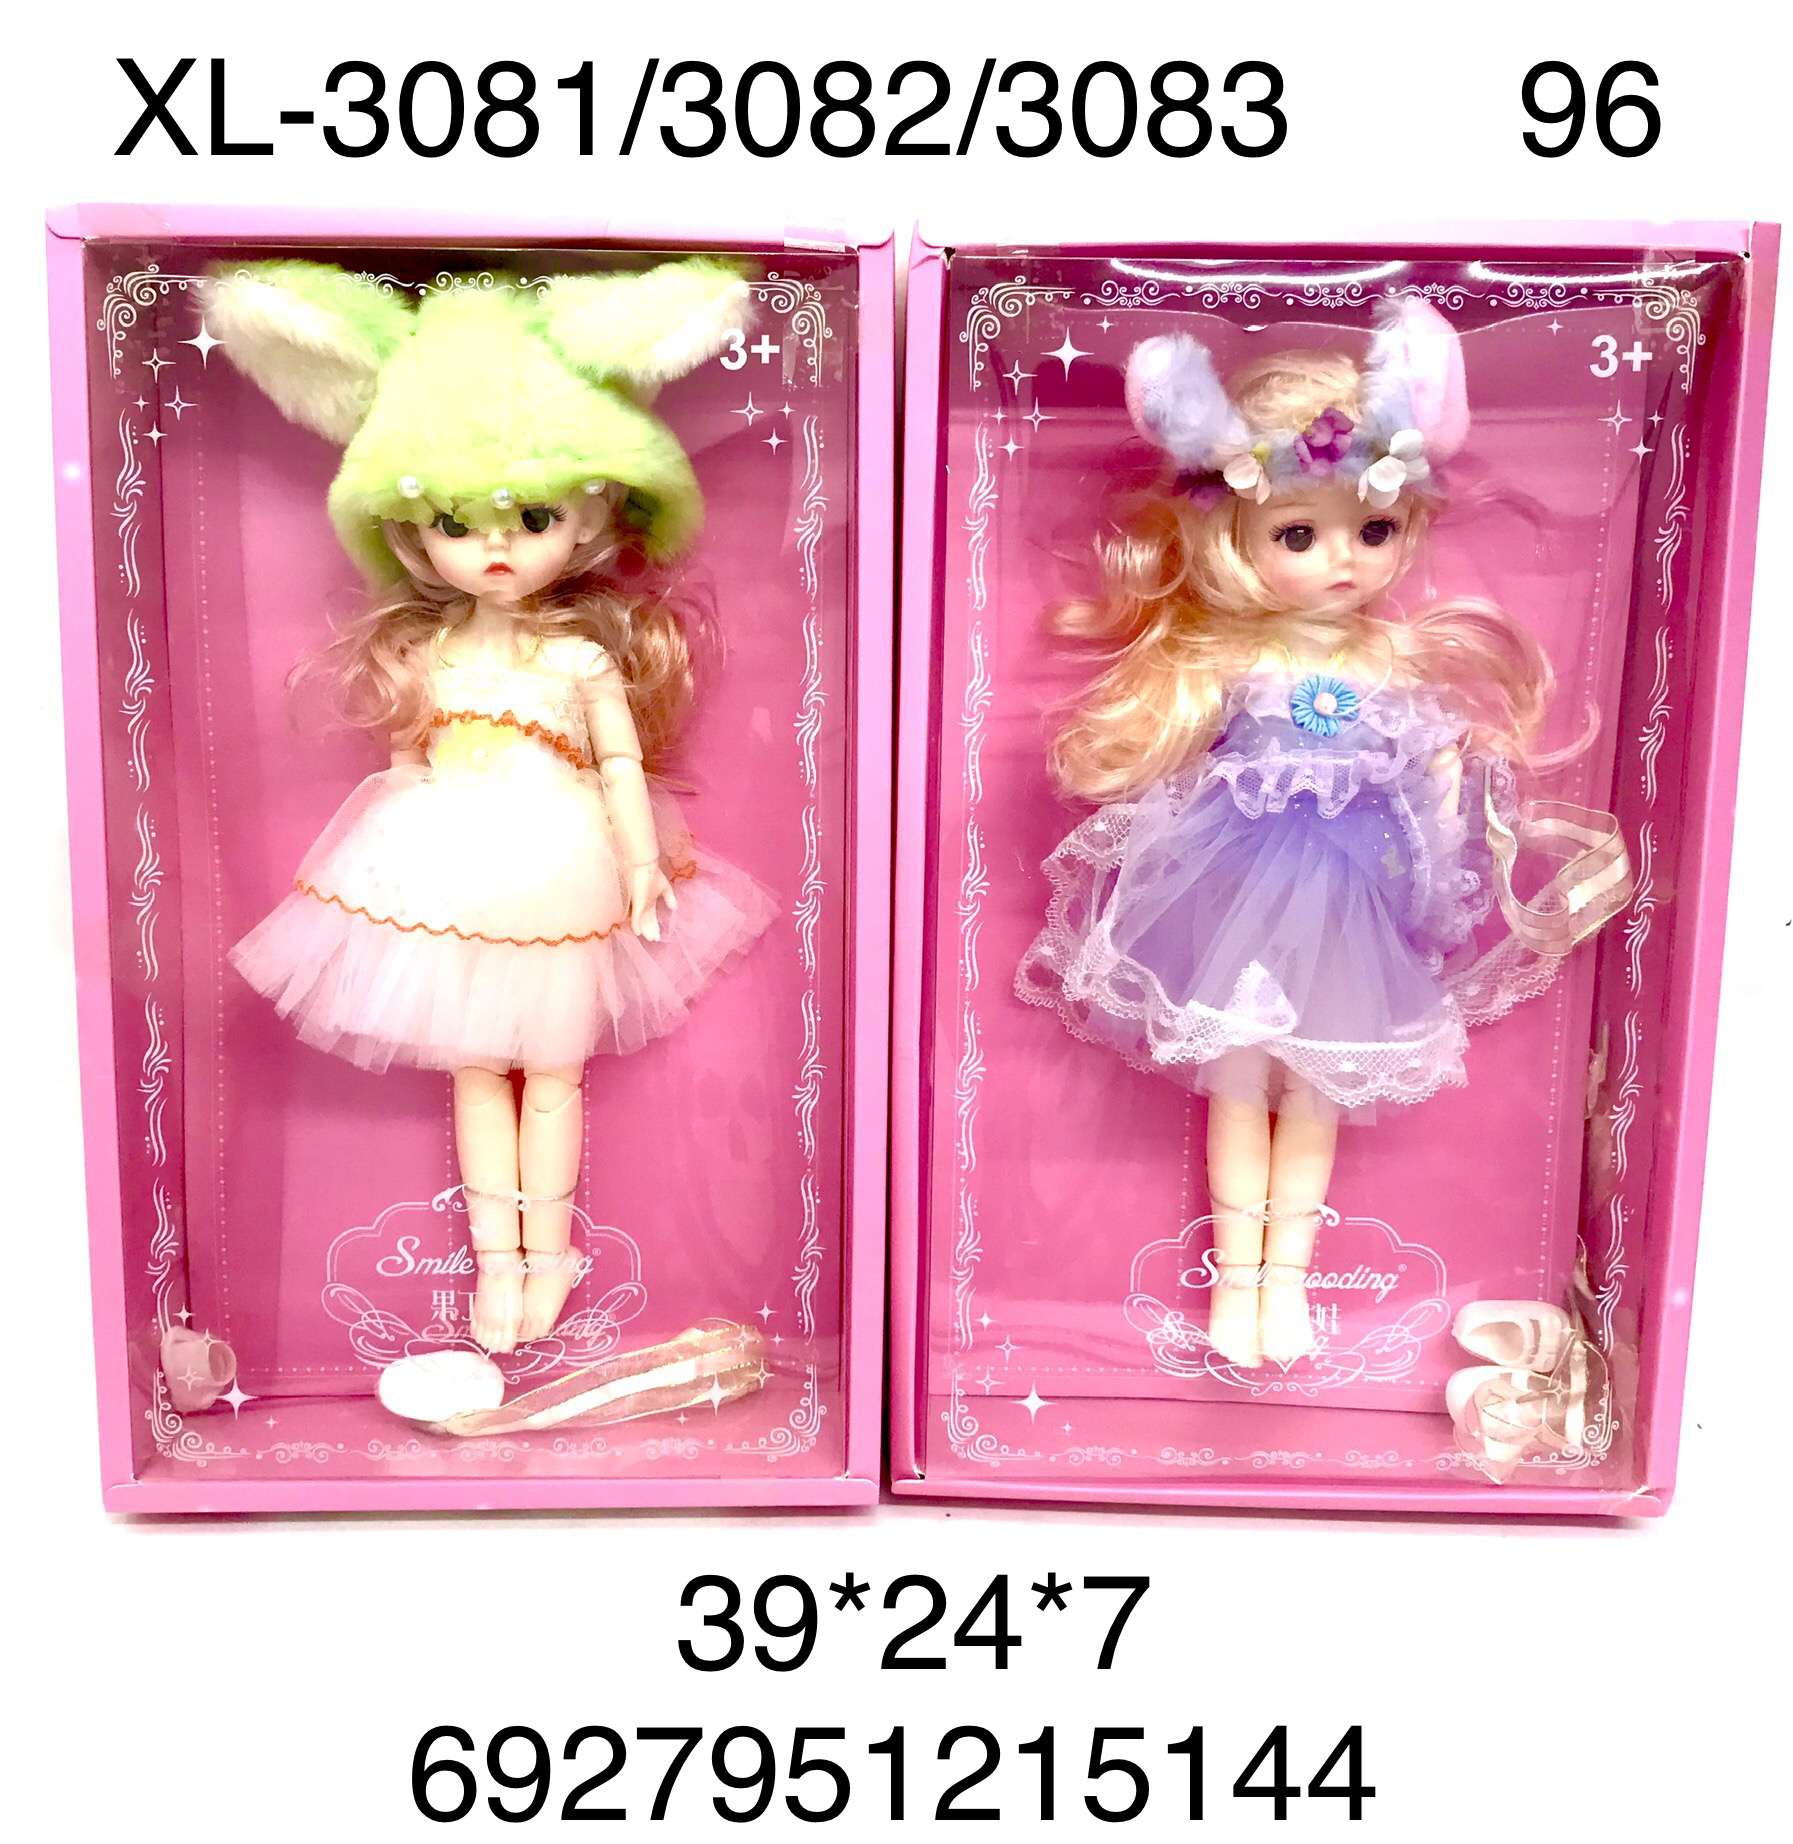 Кукла XL-3081/3082/3083 Smile в ассортименте - Елабуга 